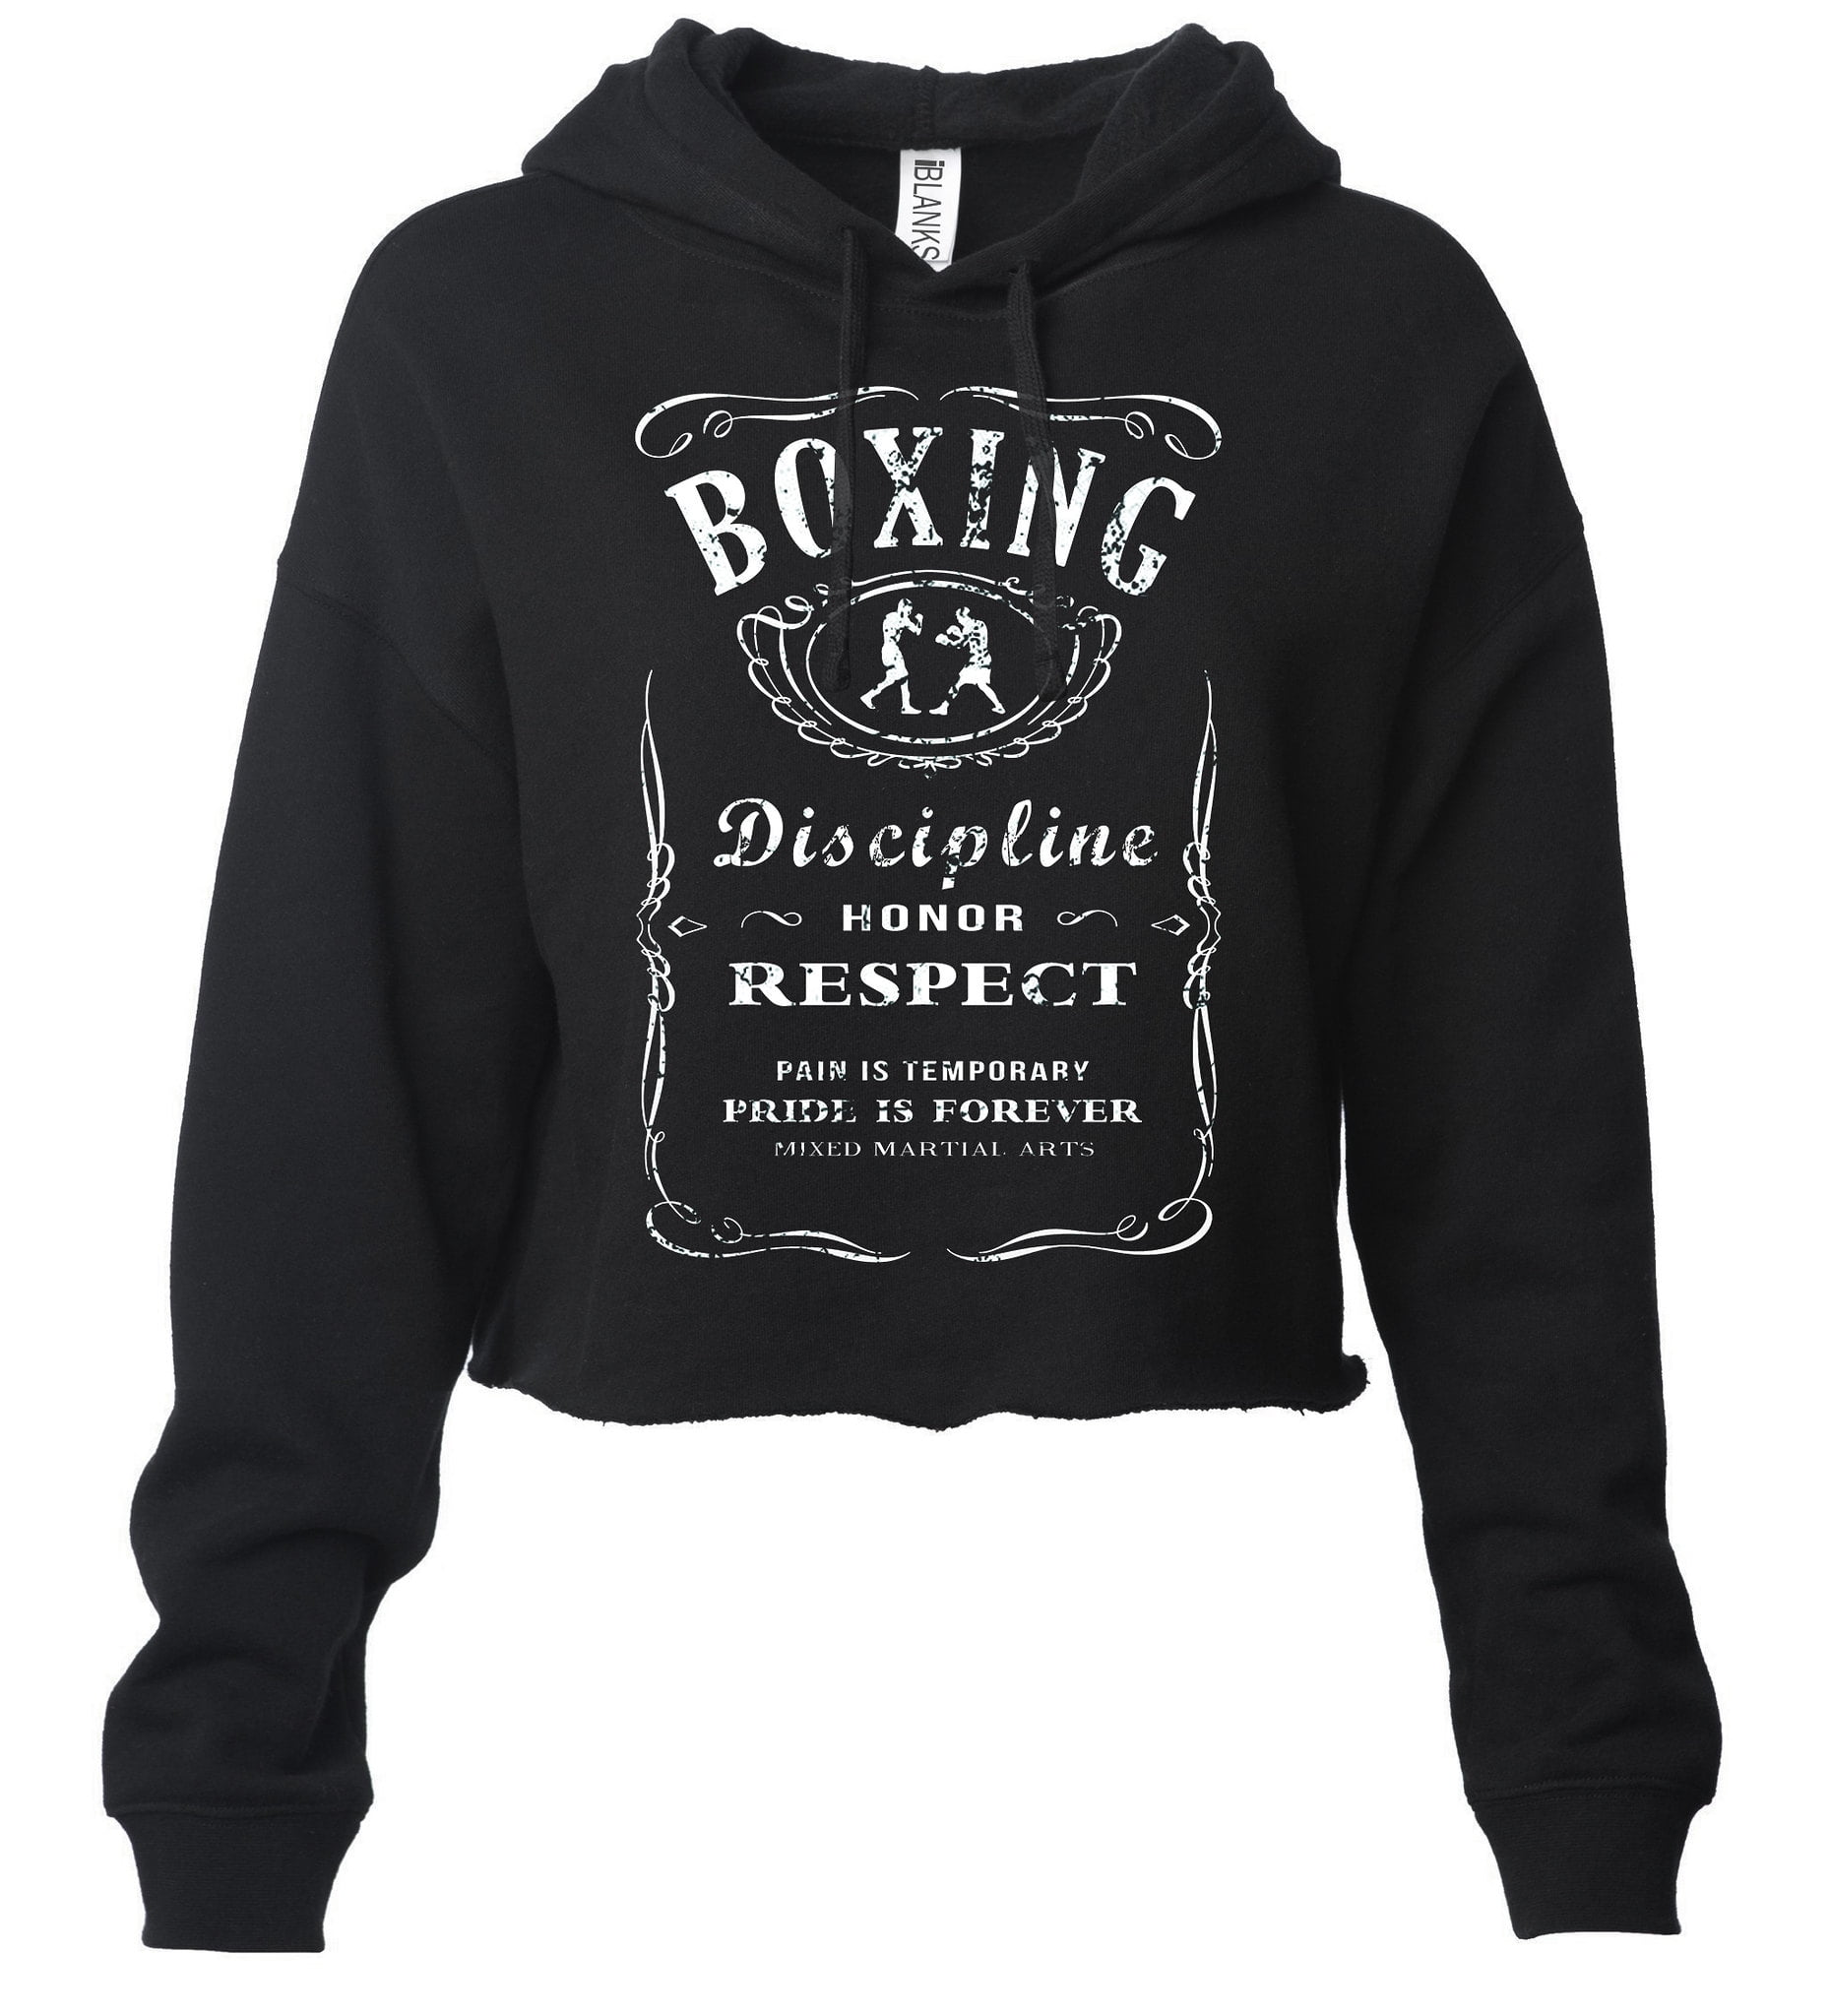 Junior's Kickboxing Whiskey Label Black T Shirt Women's Boxing MMA Fighting Gym